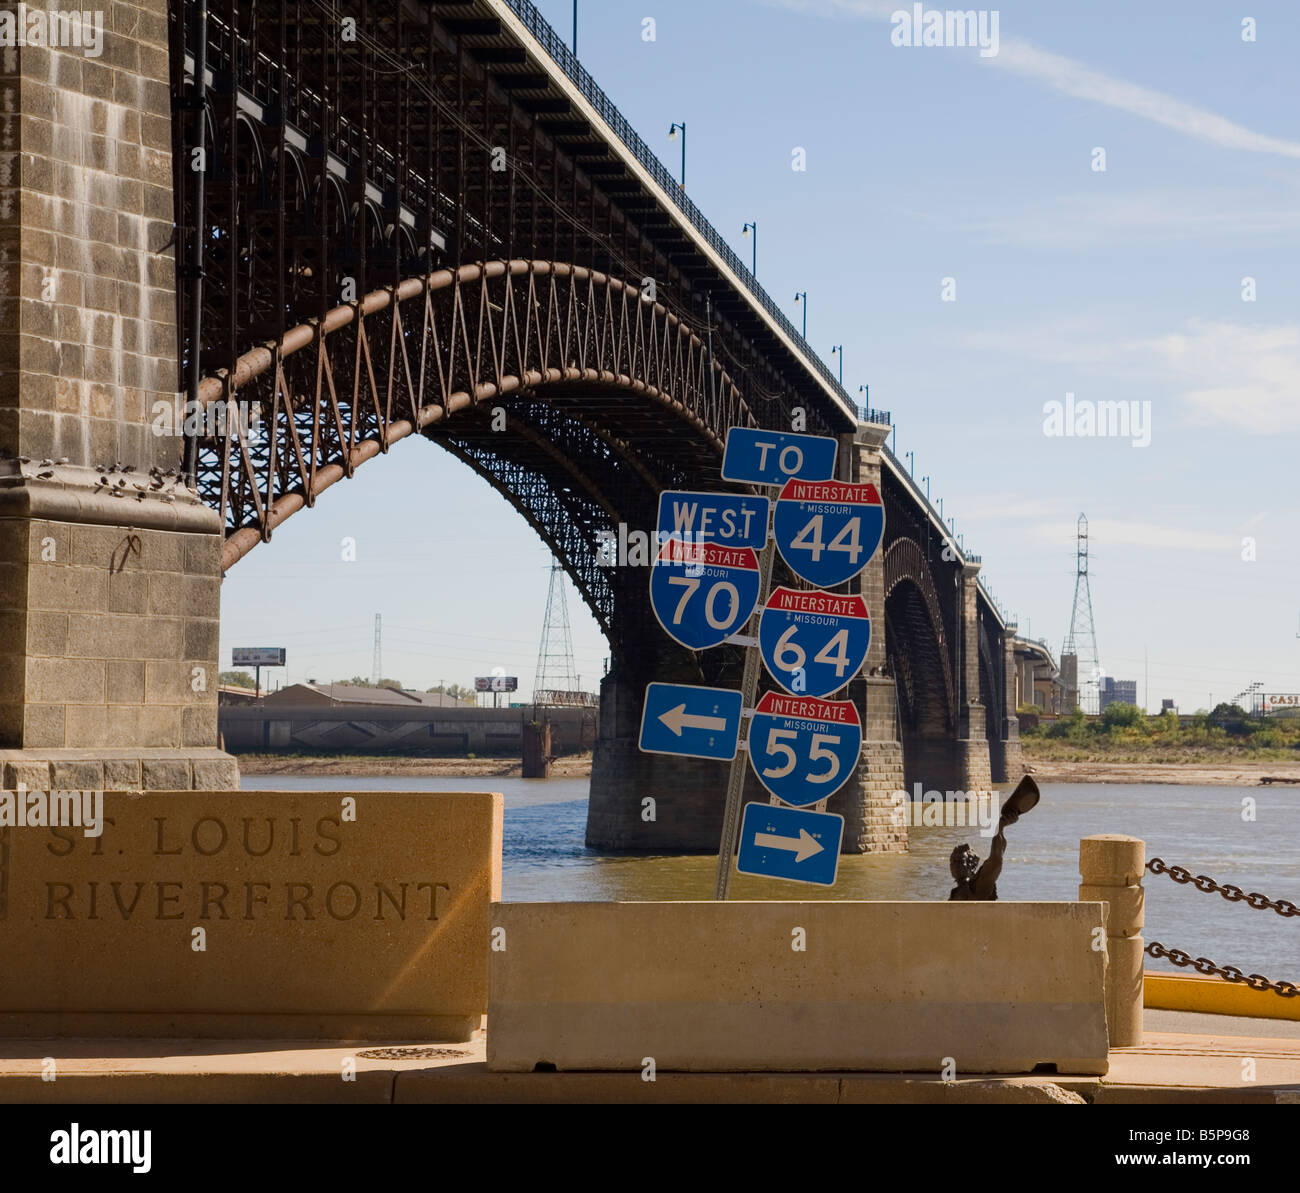 St. Louis Riverfront Stock Photo